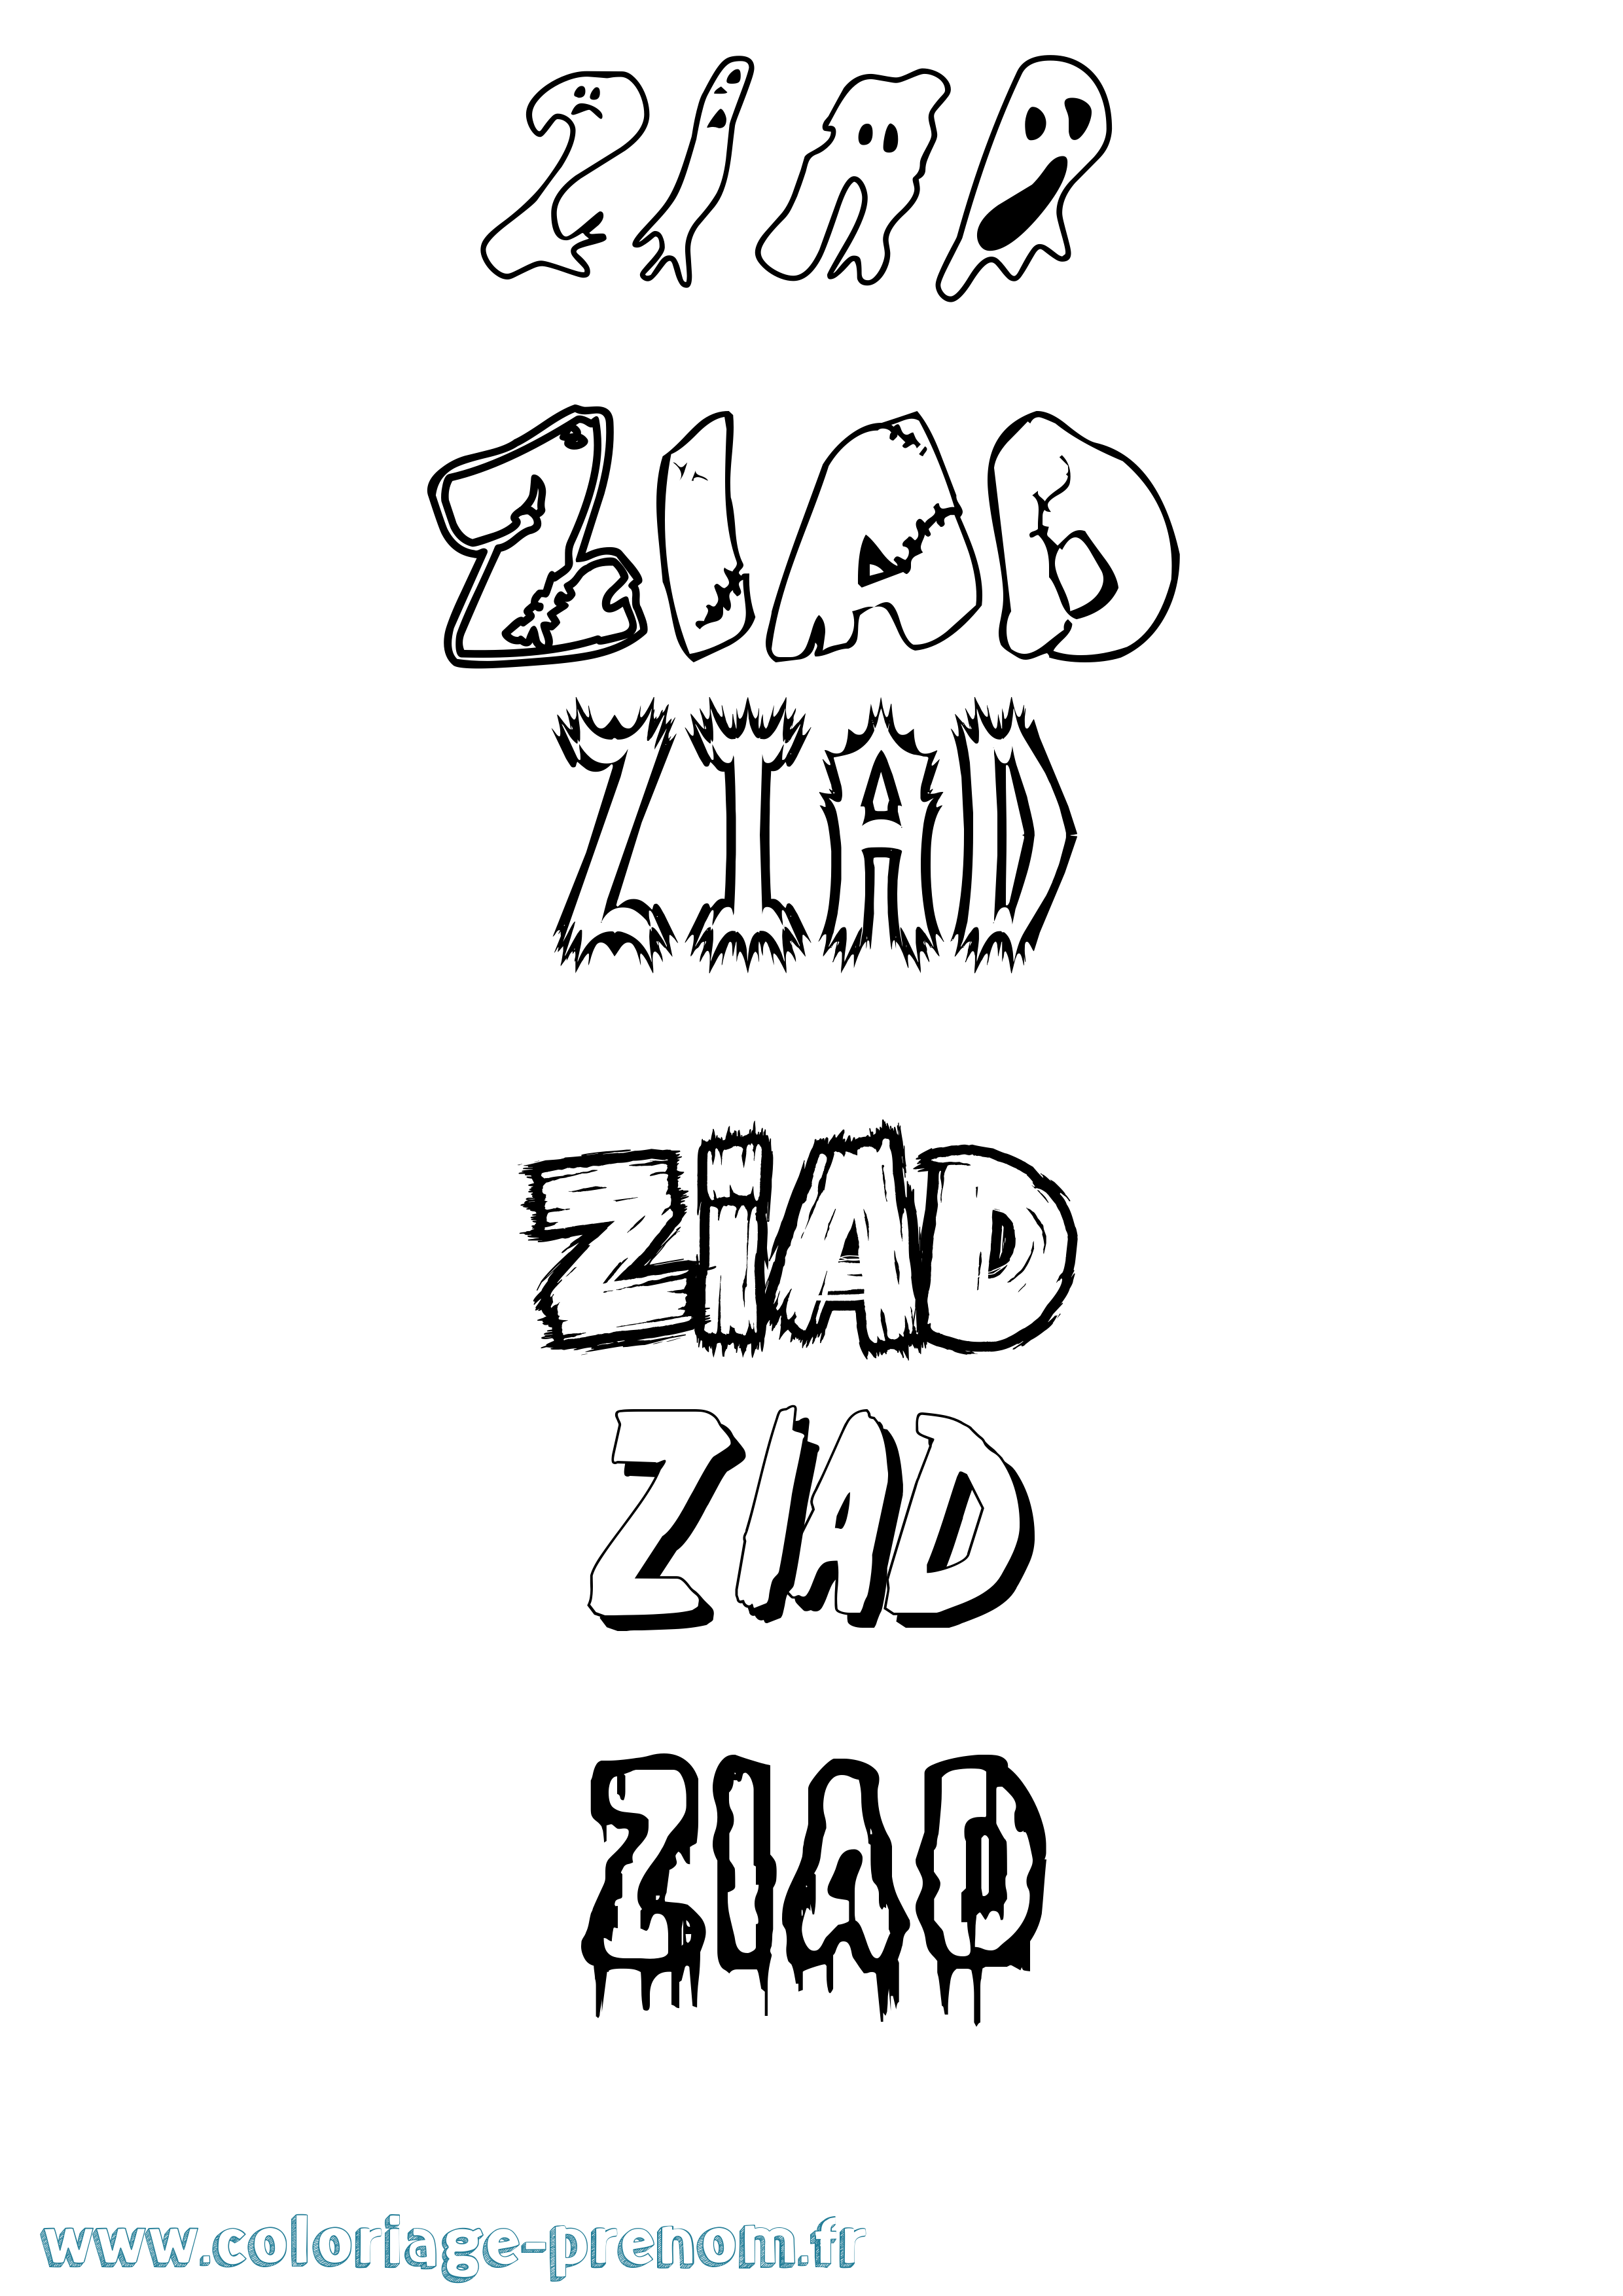 Coloriage prénom Ziad